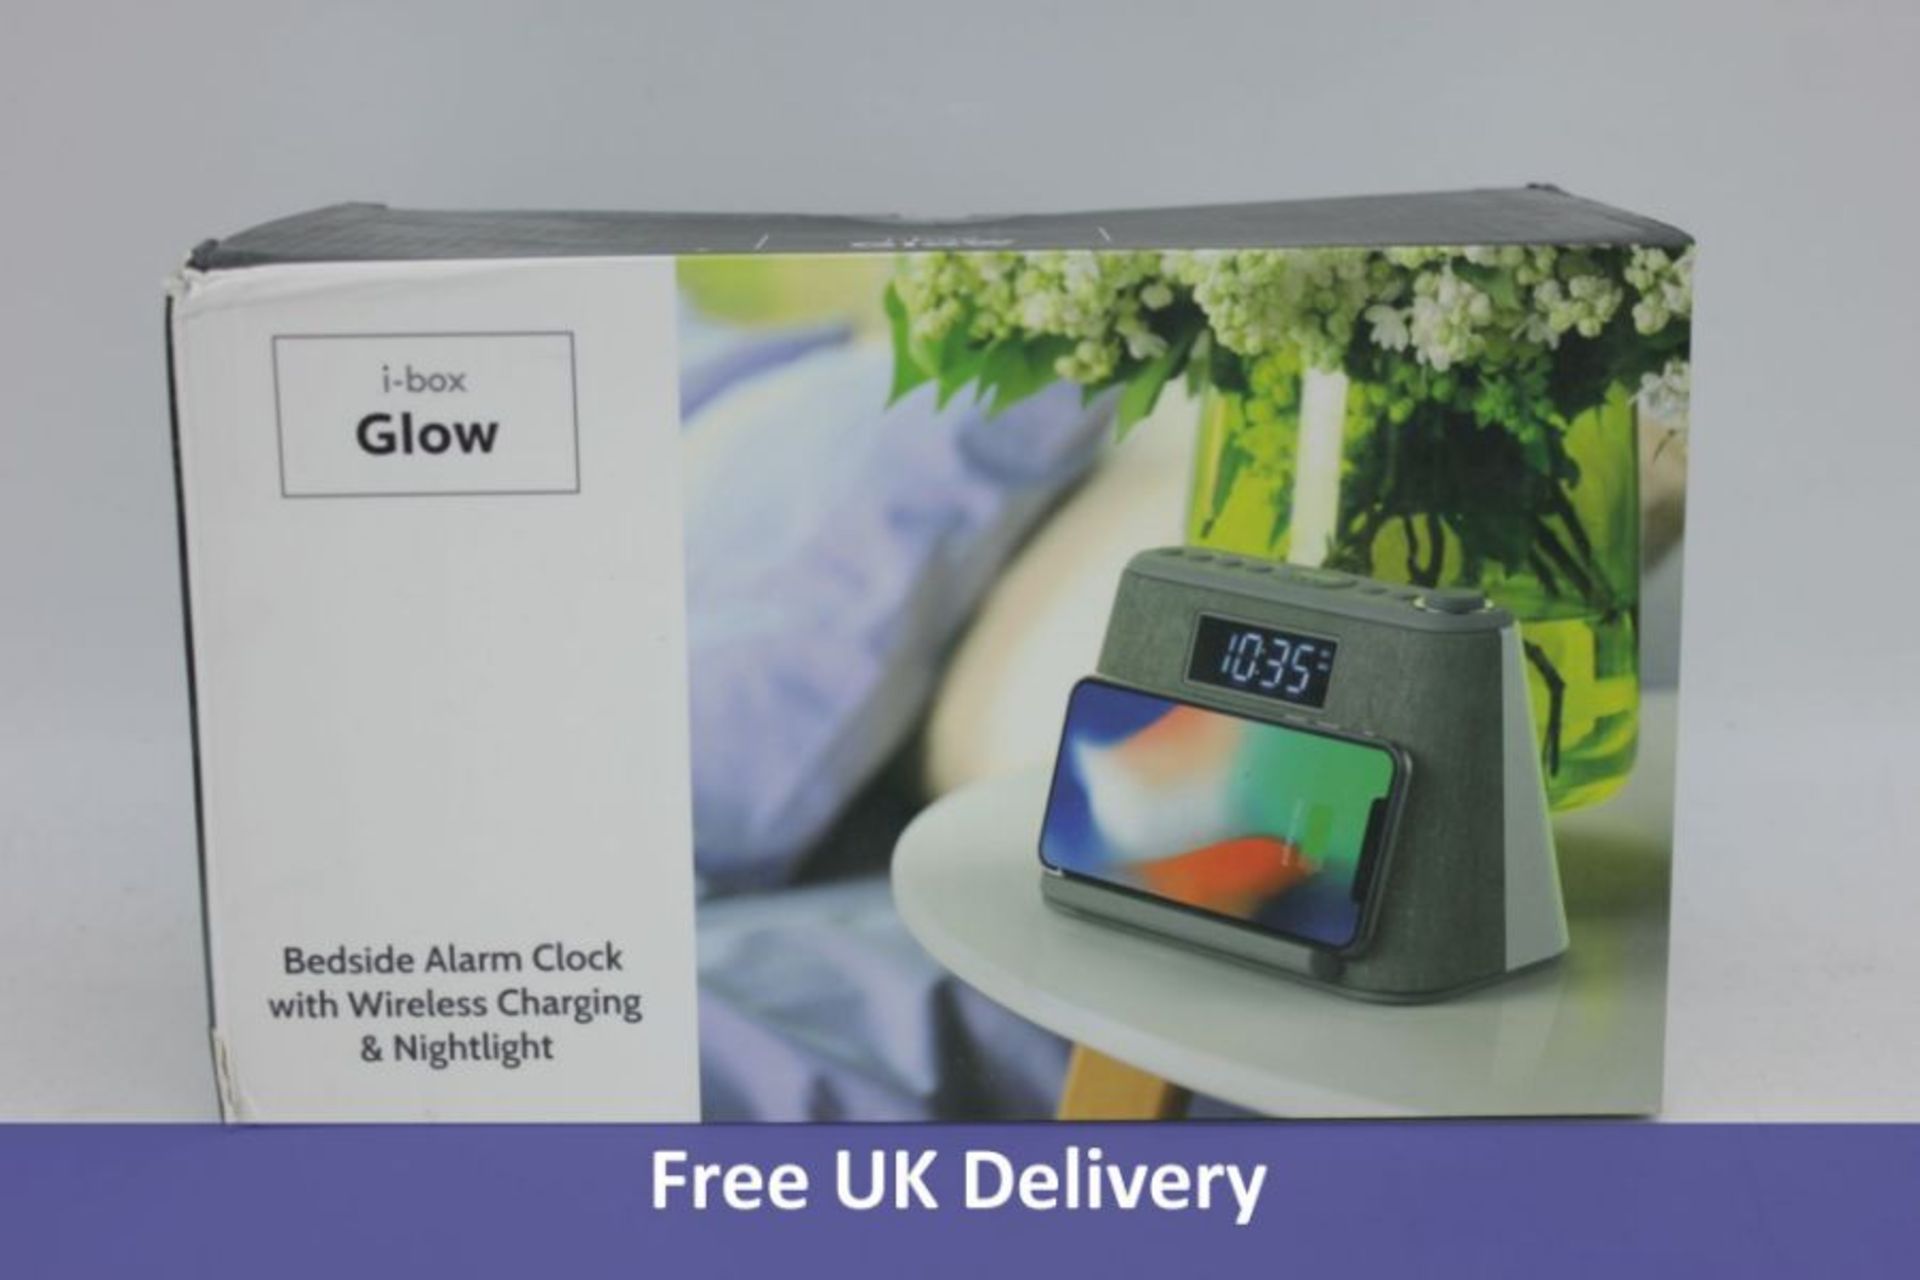 Four Glow Bedside Alarm Clocks with Wireless Charging & Night